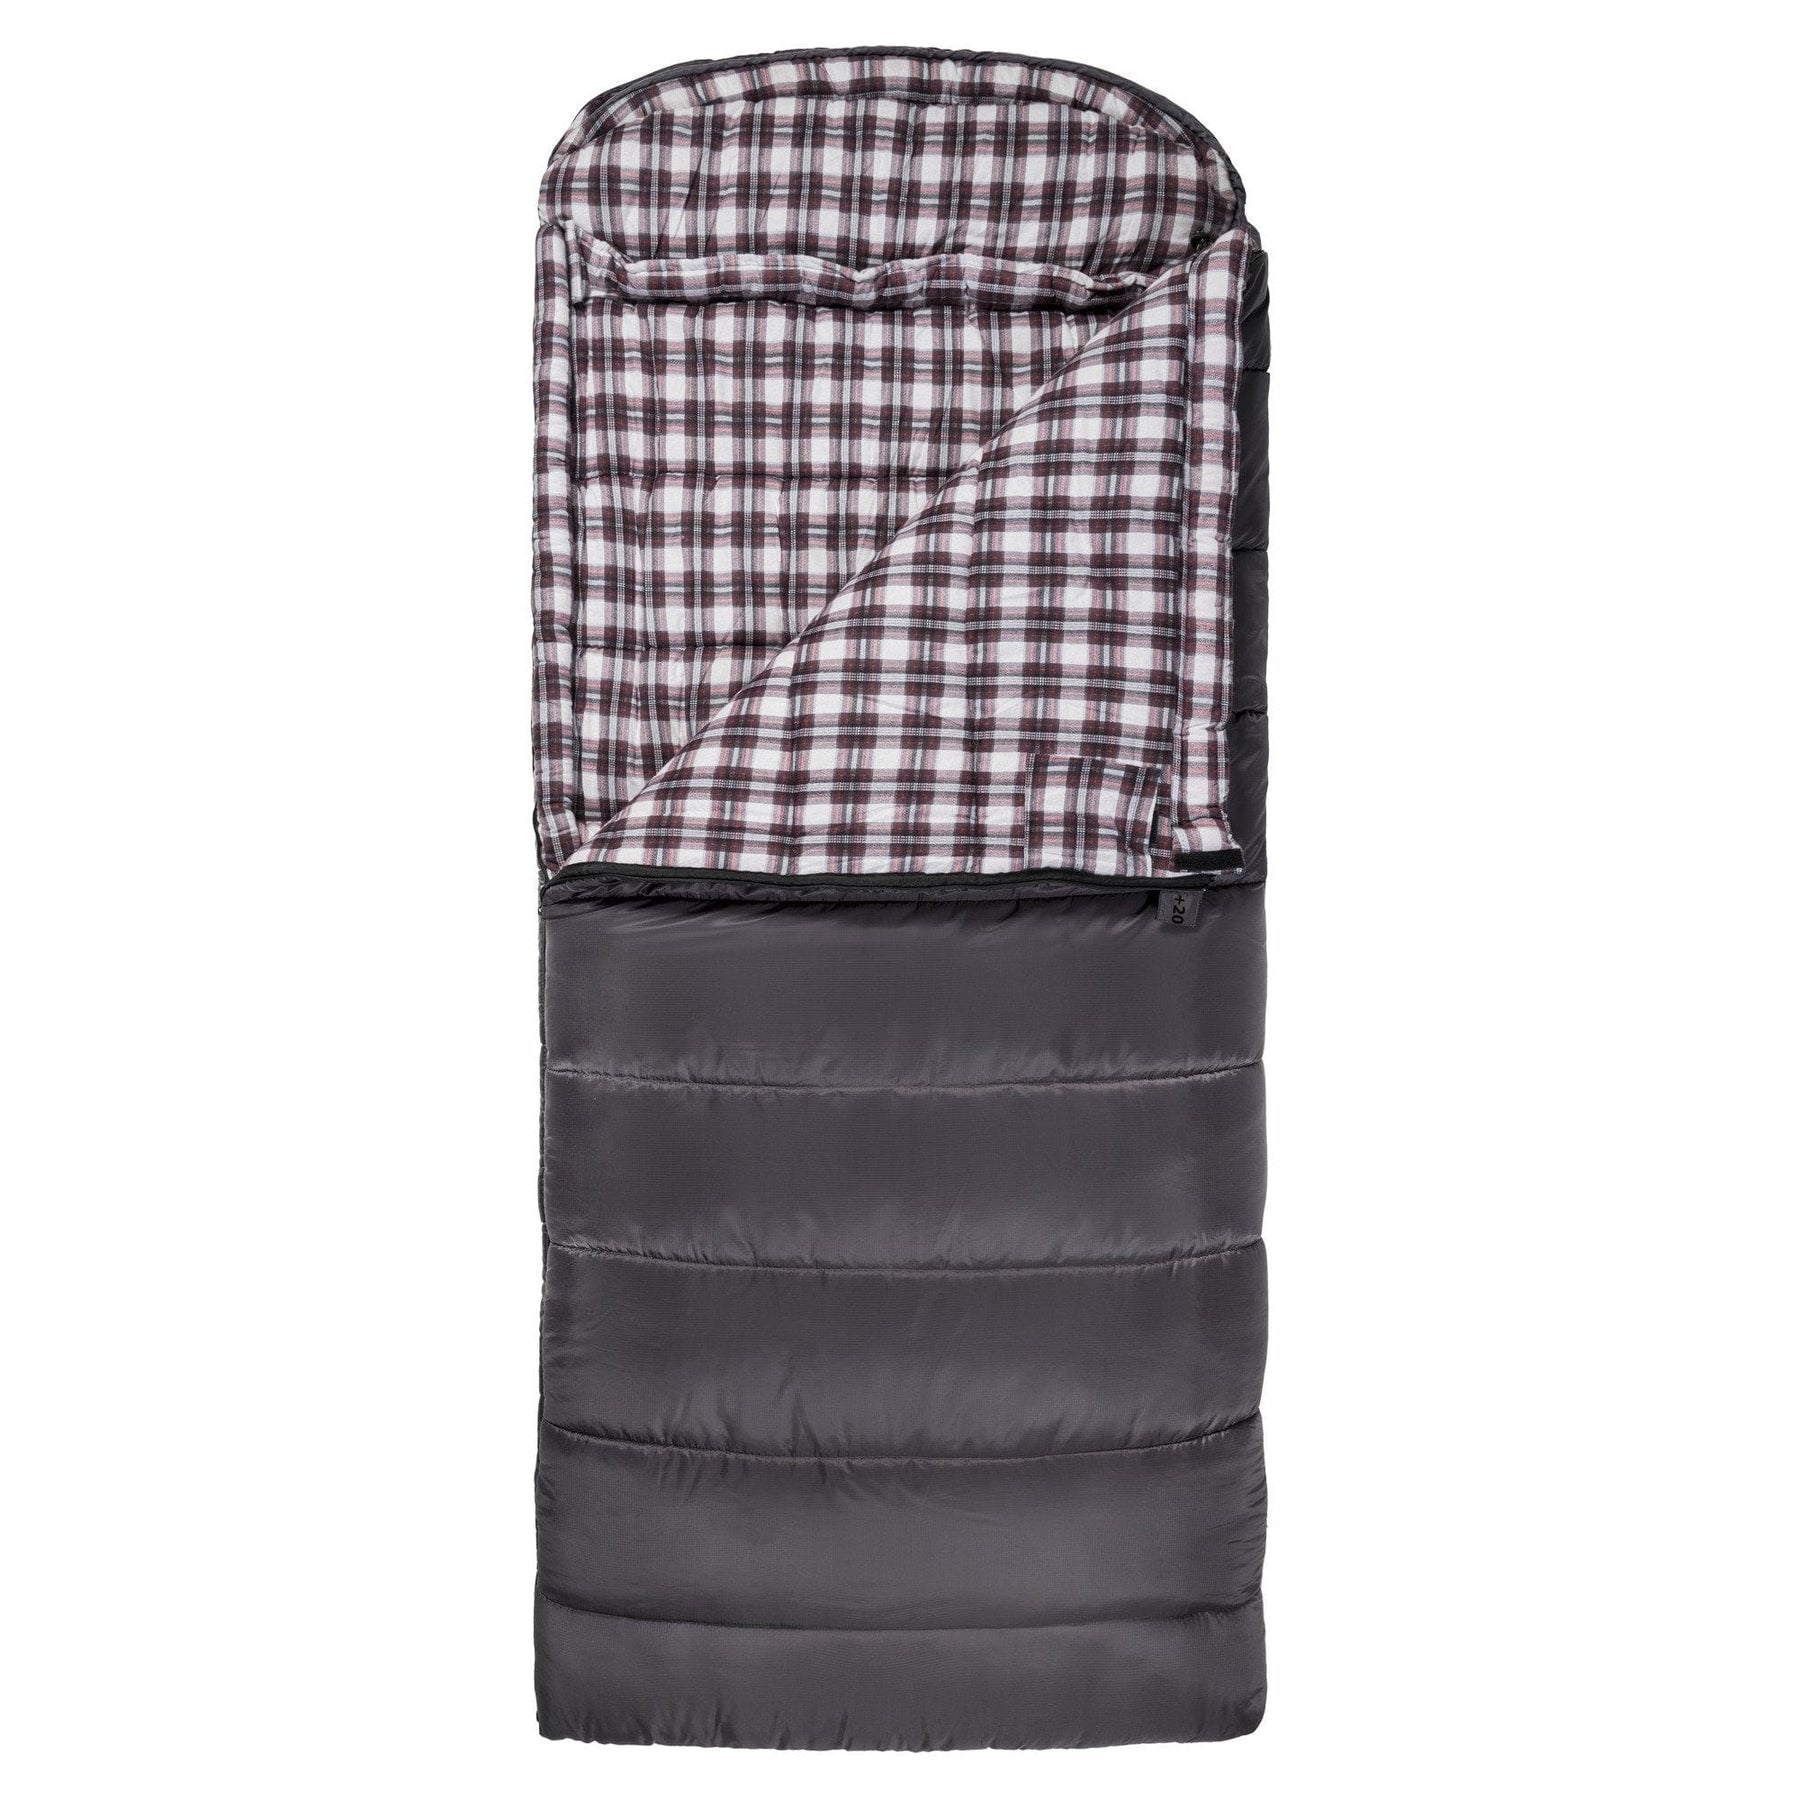 TETON Sports Fahrenheit XXL -25ºF Sleeping Bag Right Zipper 1062R